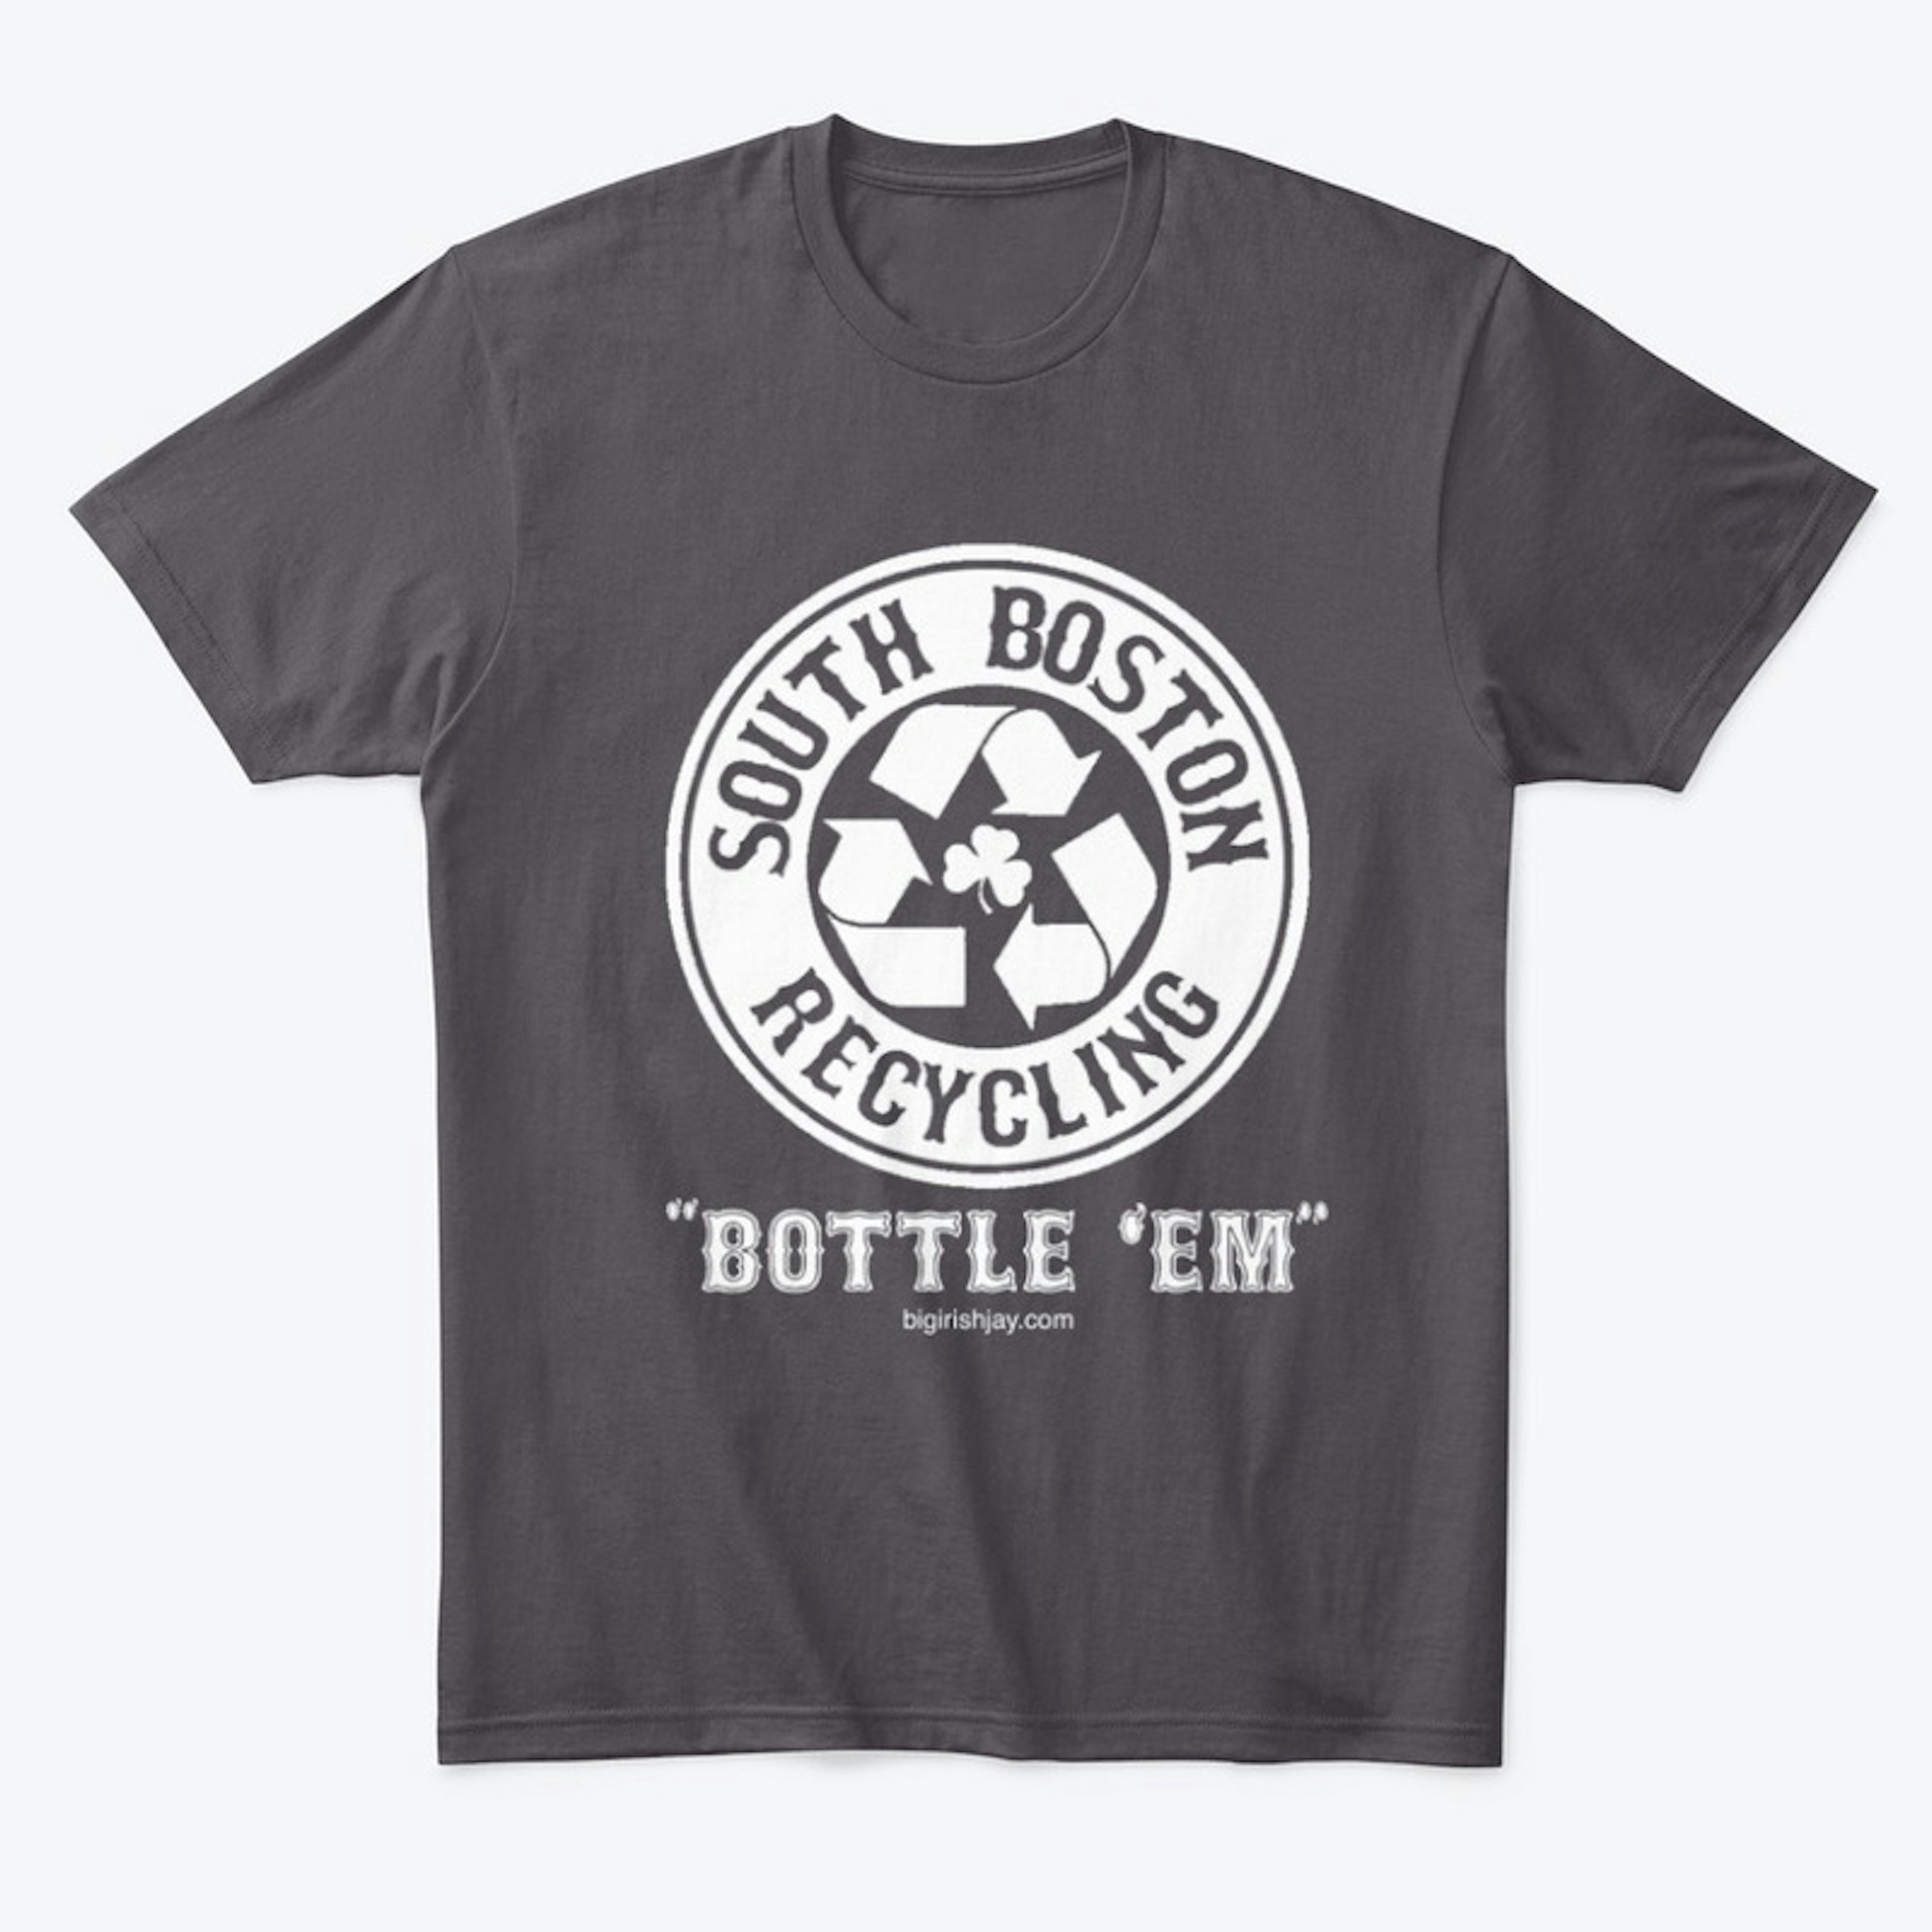 South Boston Recycling "Bottle 'Em"